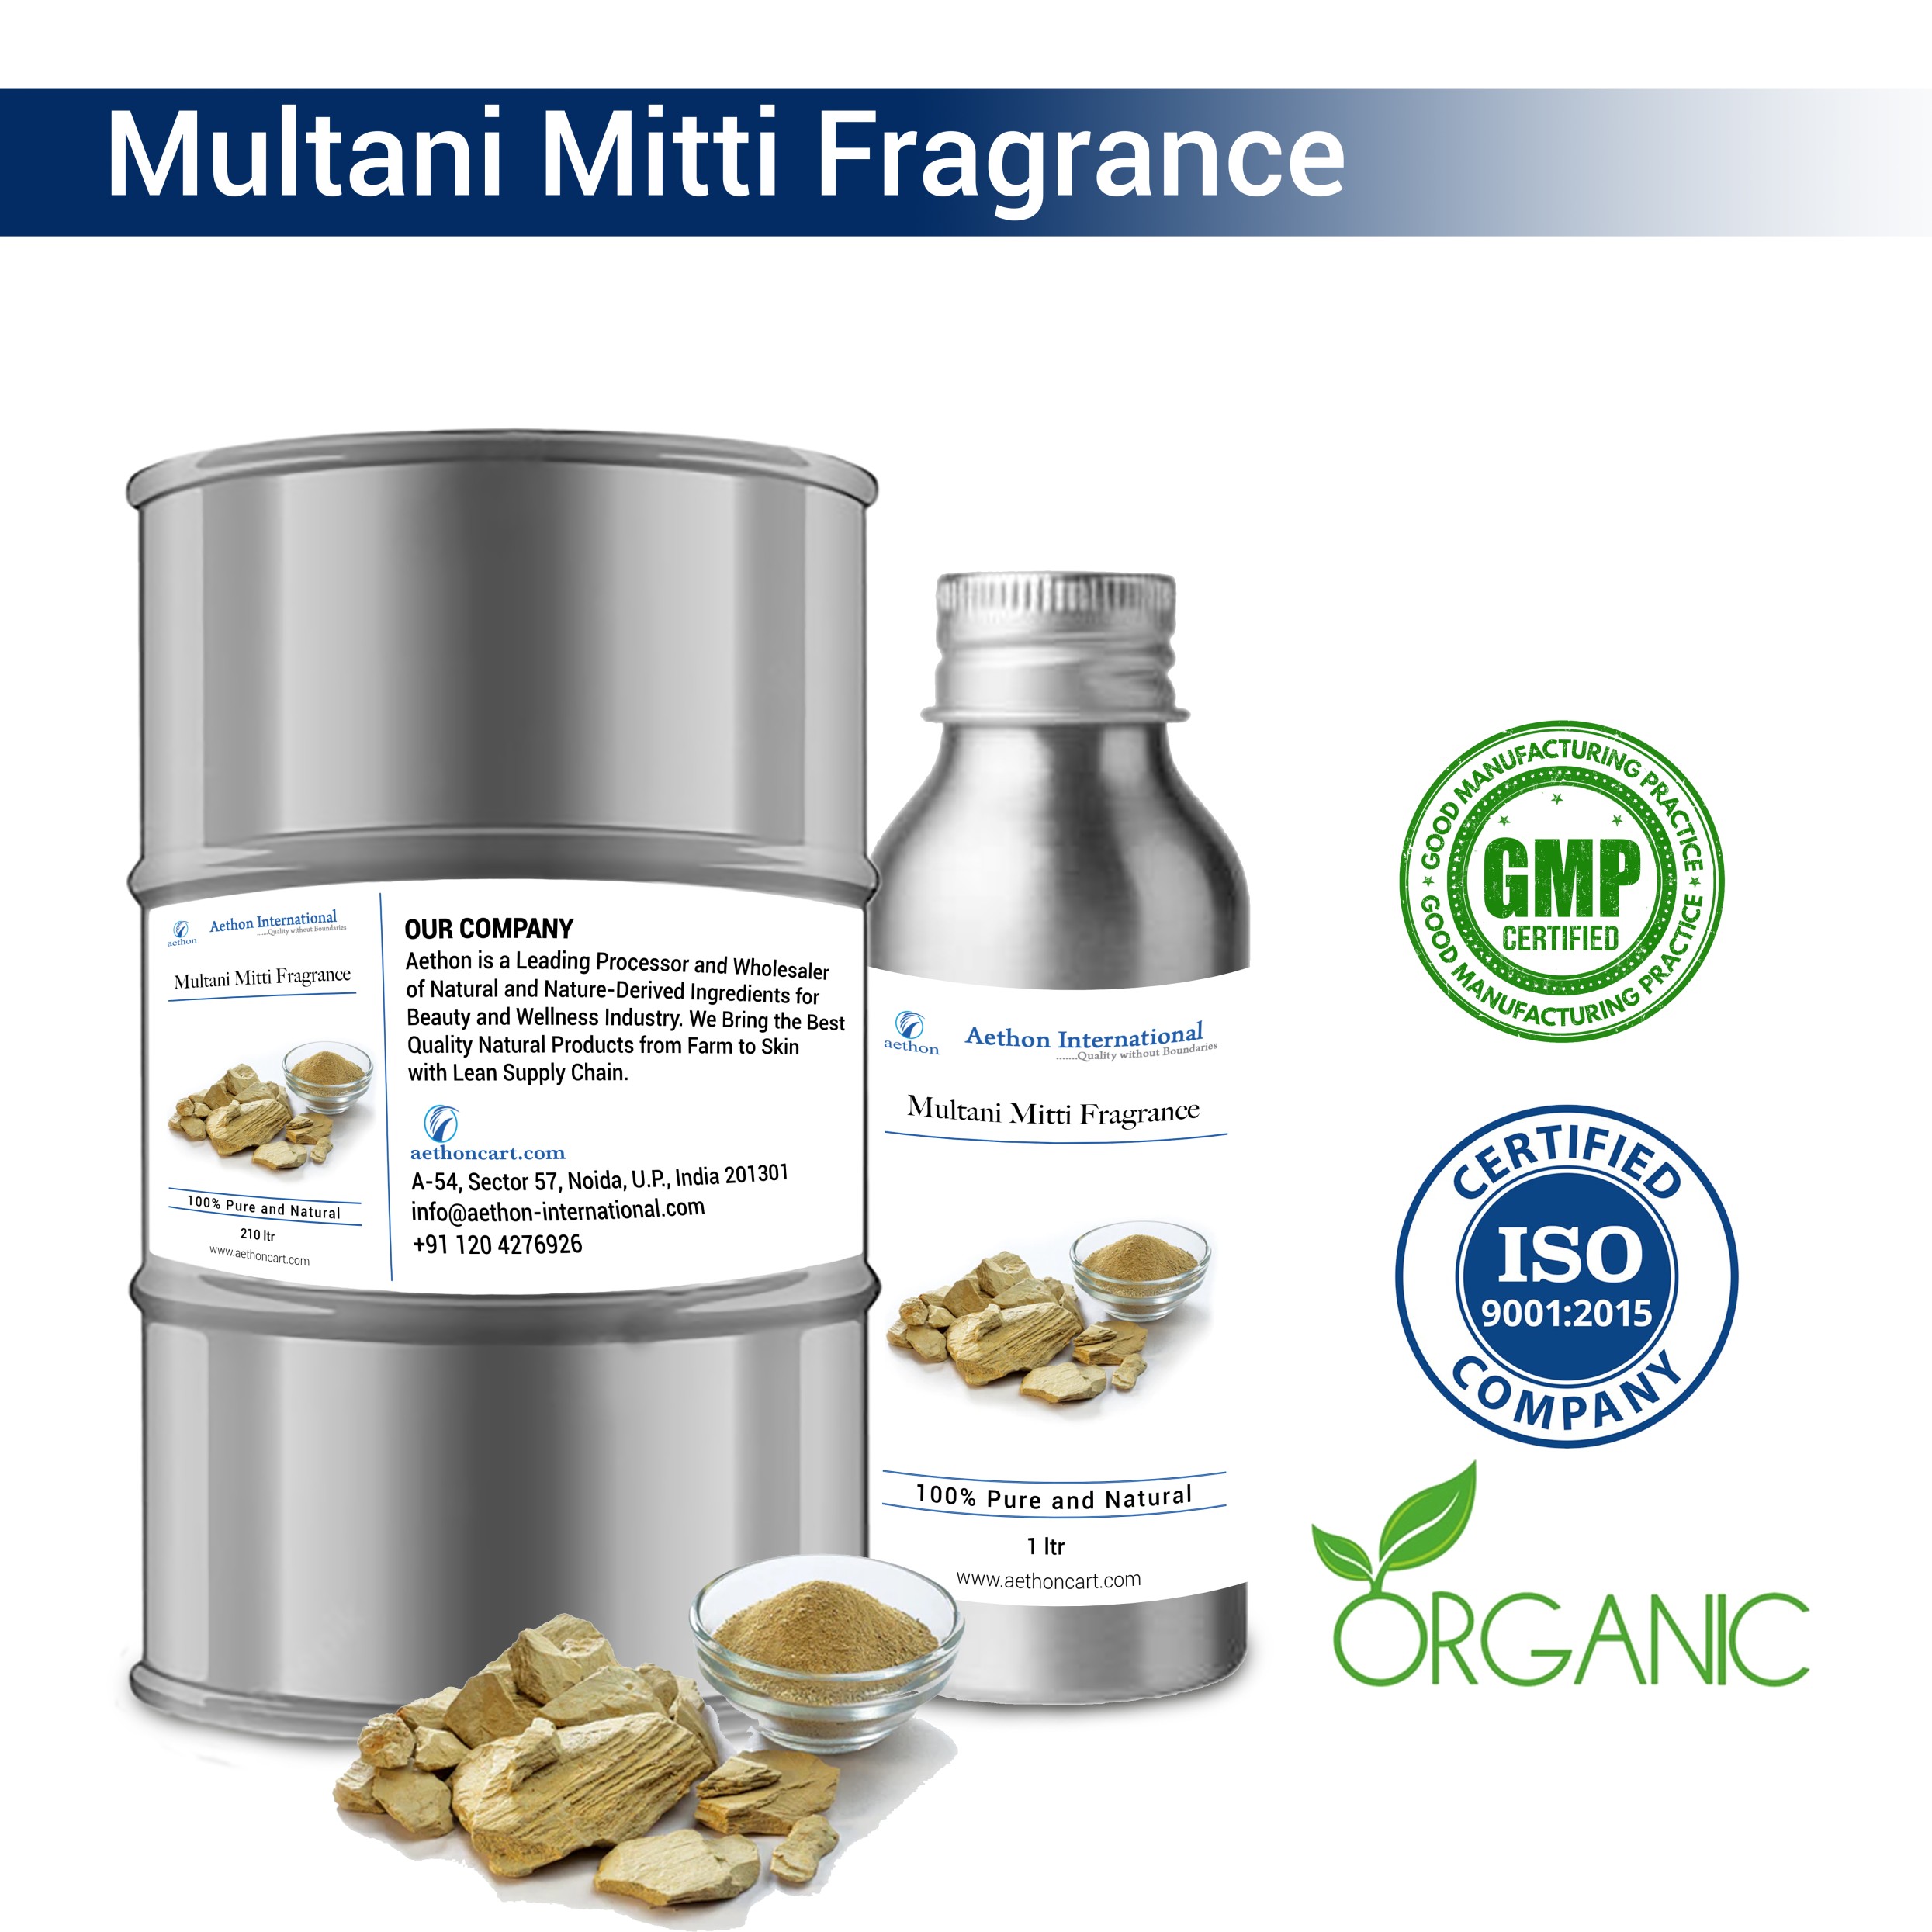 Multani Mitti Fragrance